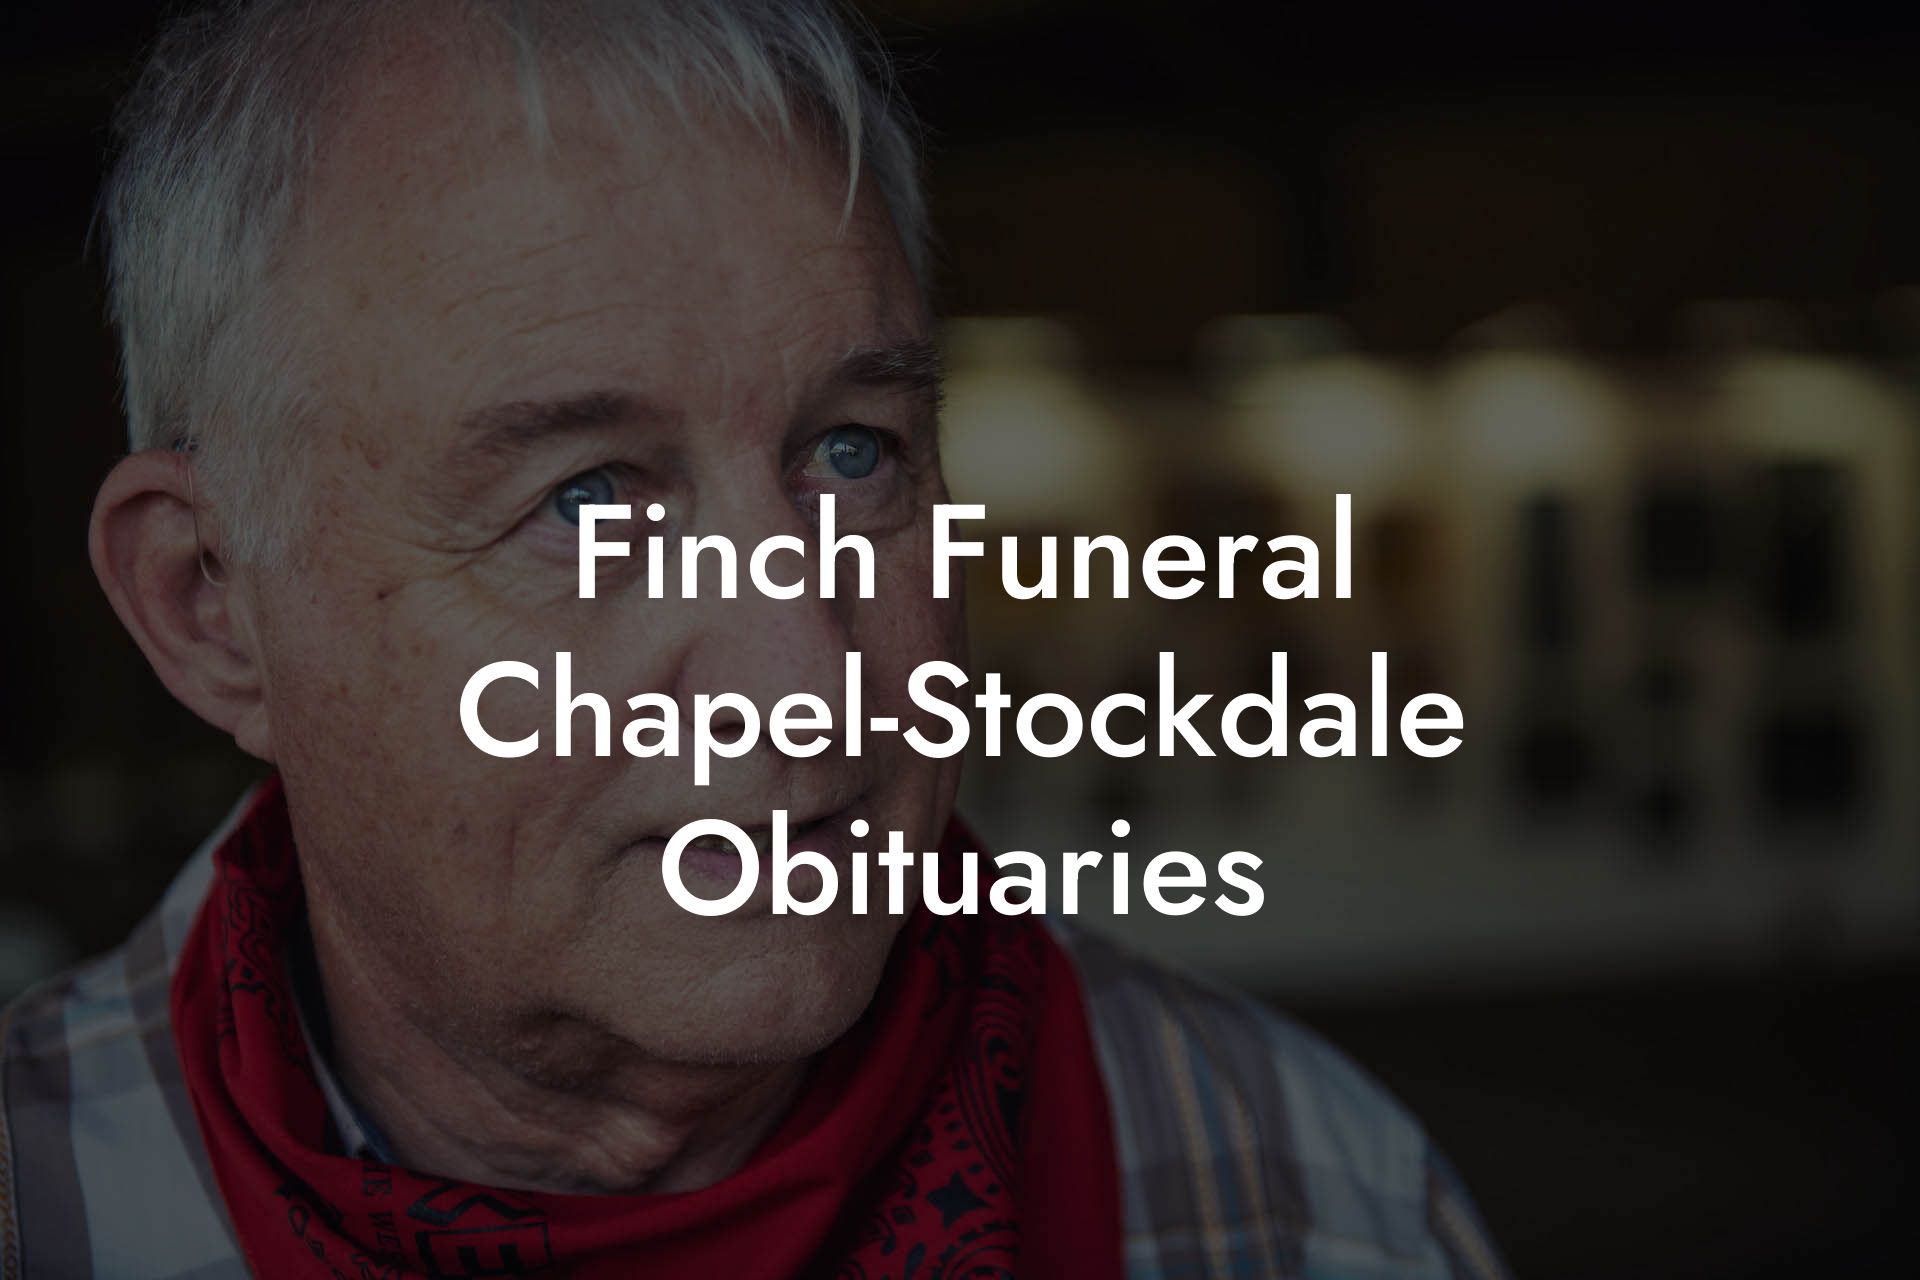 Finch Funeral Chapel-Stockdale Obituaries